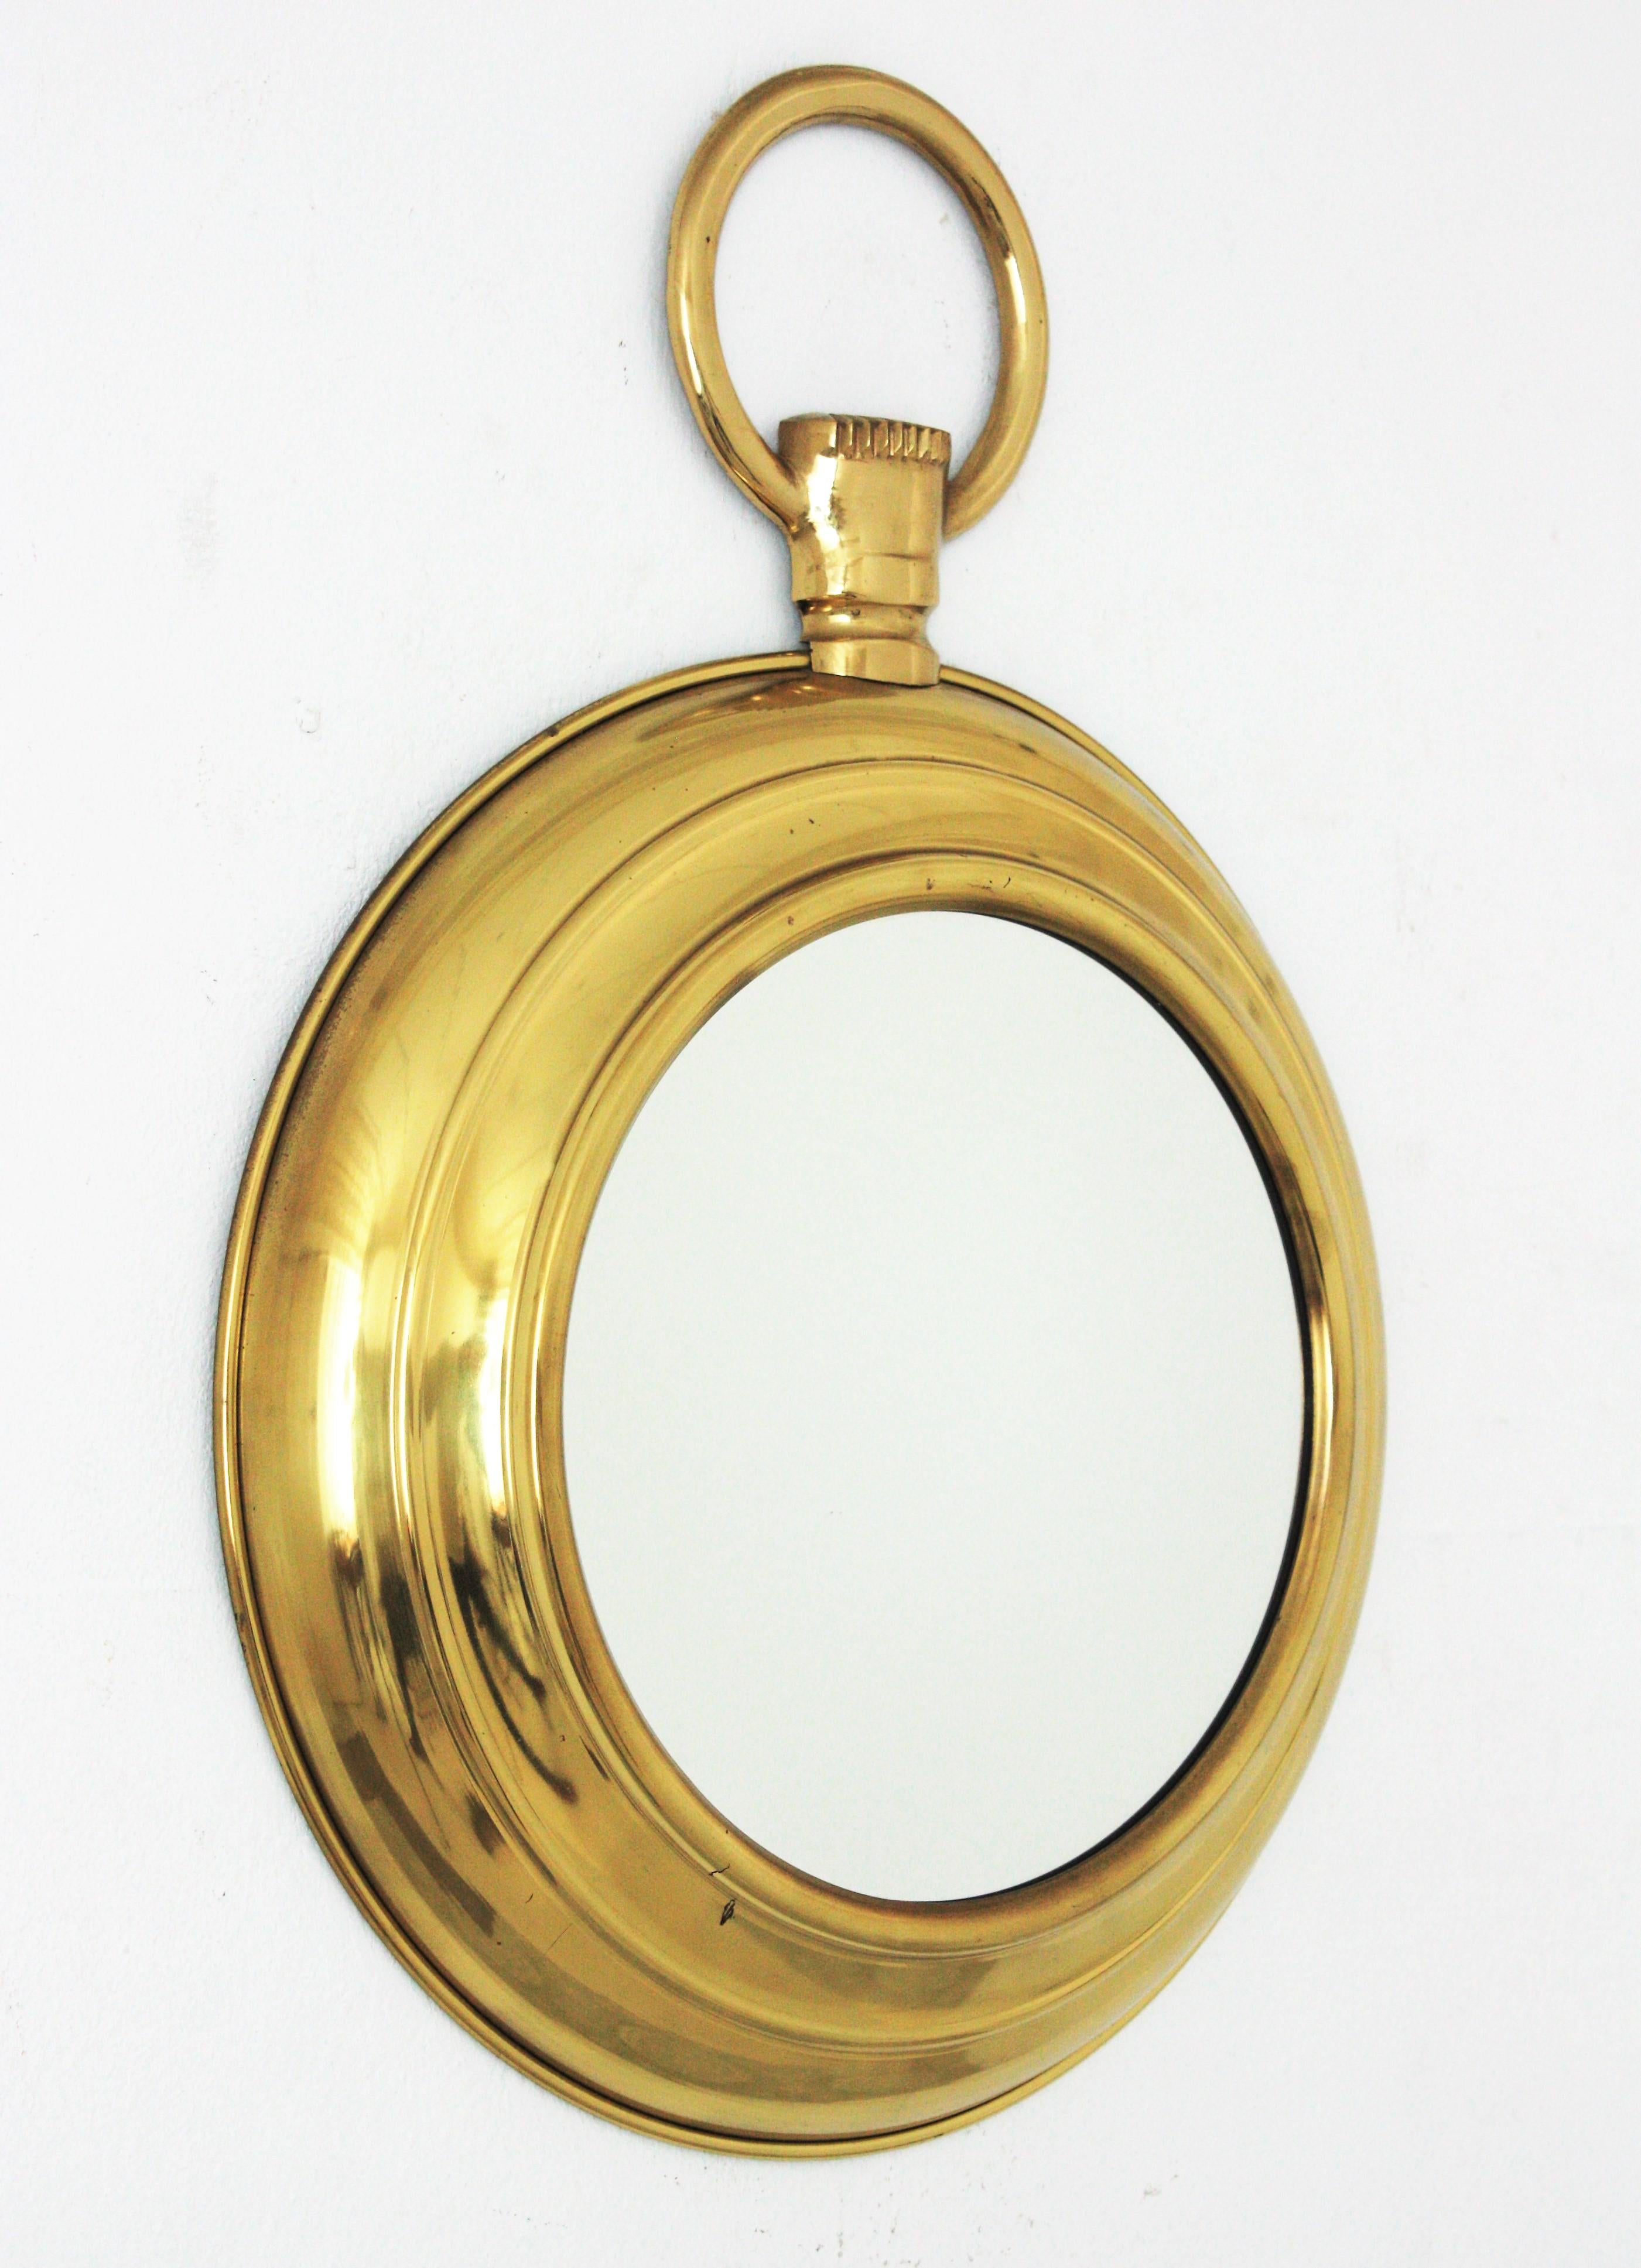 Fornasetti Style Midcentury Brass Pocket Watch Round Wall Mirror (miroir de poche en laiton)

Miroir mural en forme de montre de poche en laiton, dans le style de Piero Fornasetti. Italie, années 1950-1960.
Bien construit.
Ce miroir mural sera un